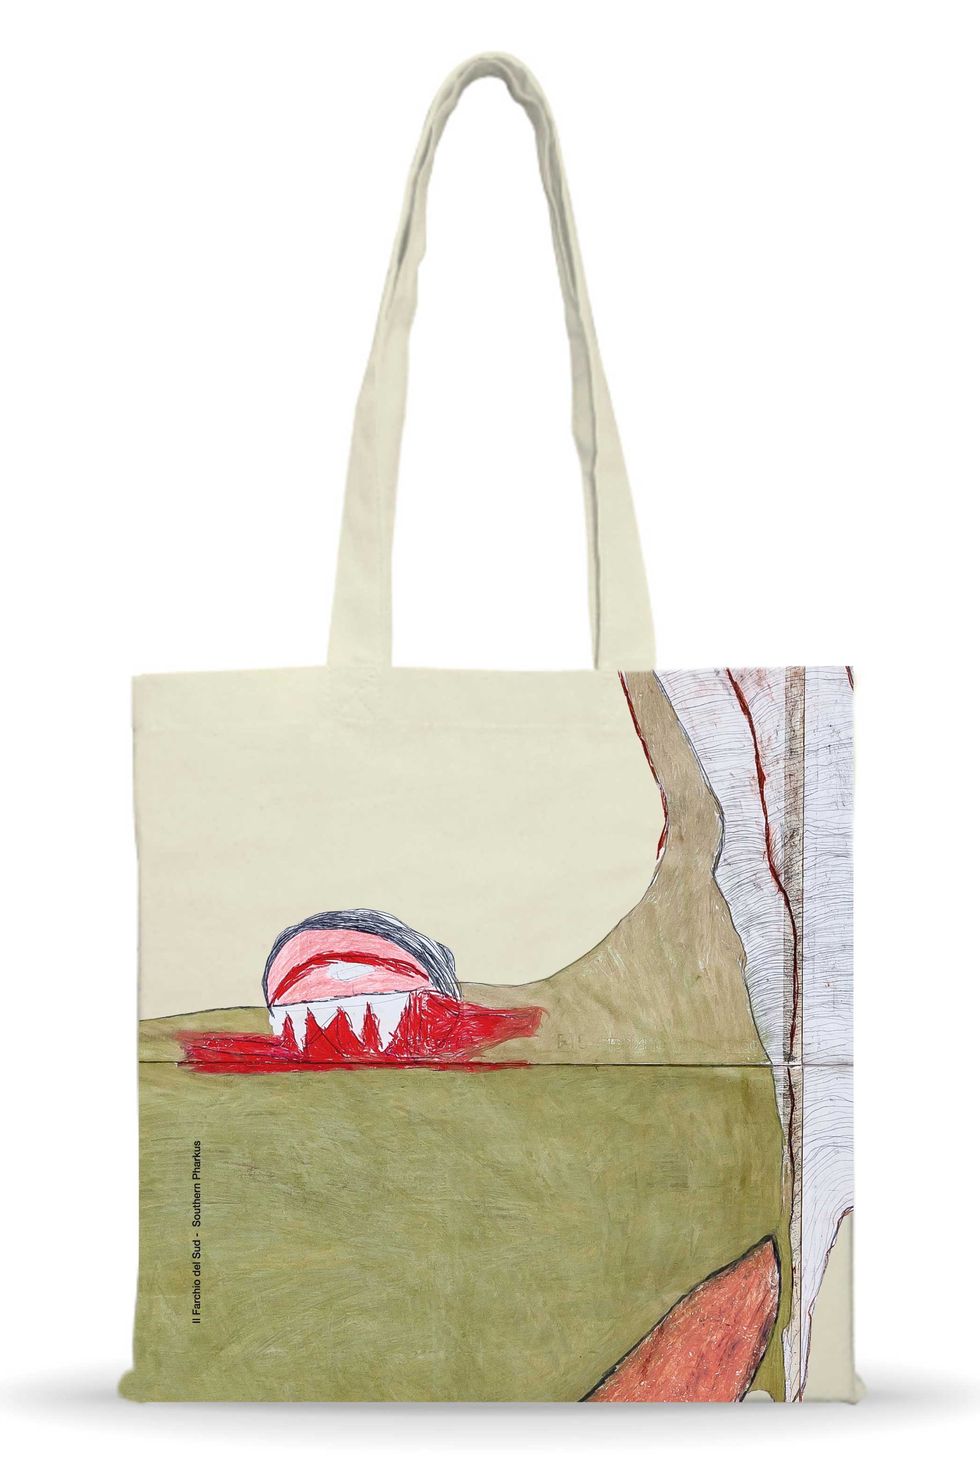 MaxMara shopping bag by Atelier dell'Errore